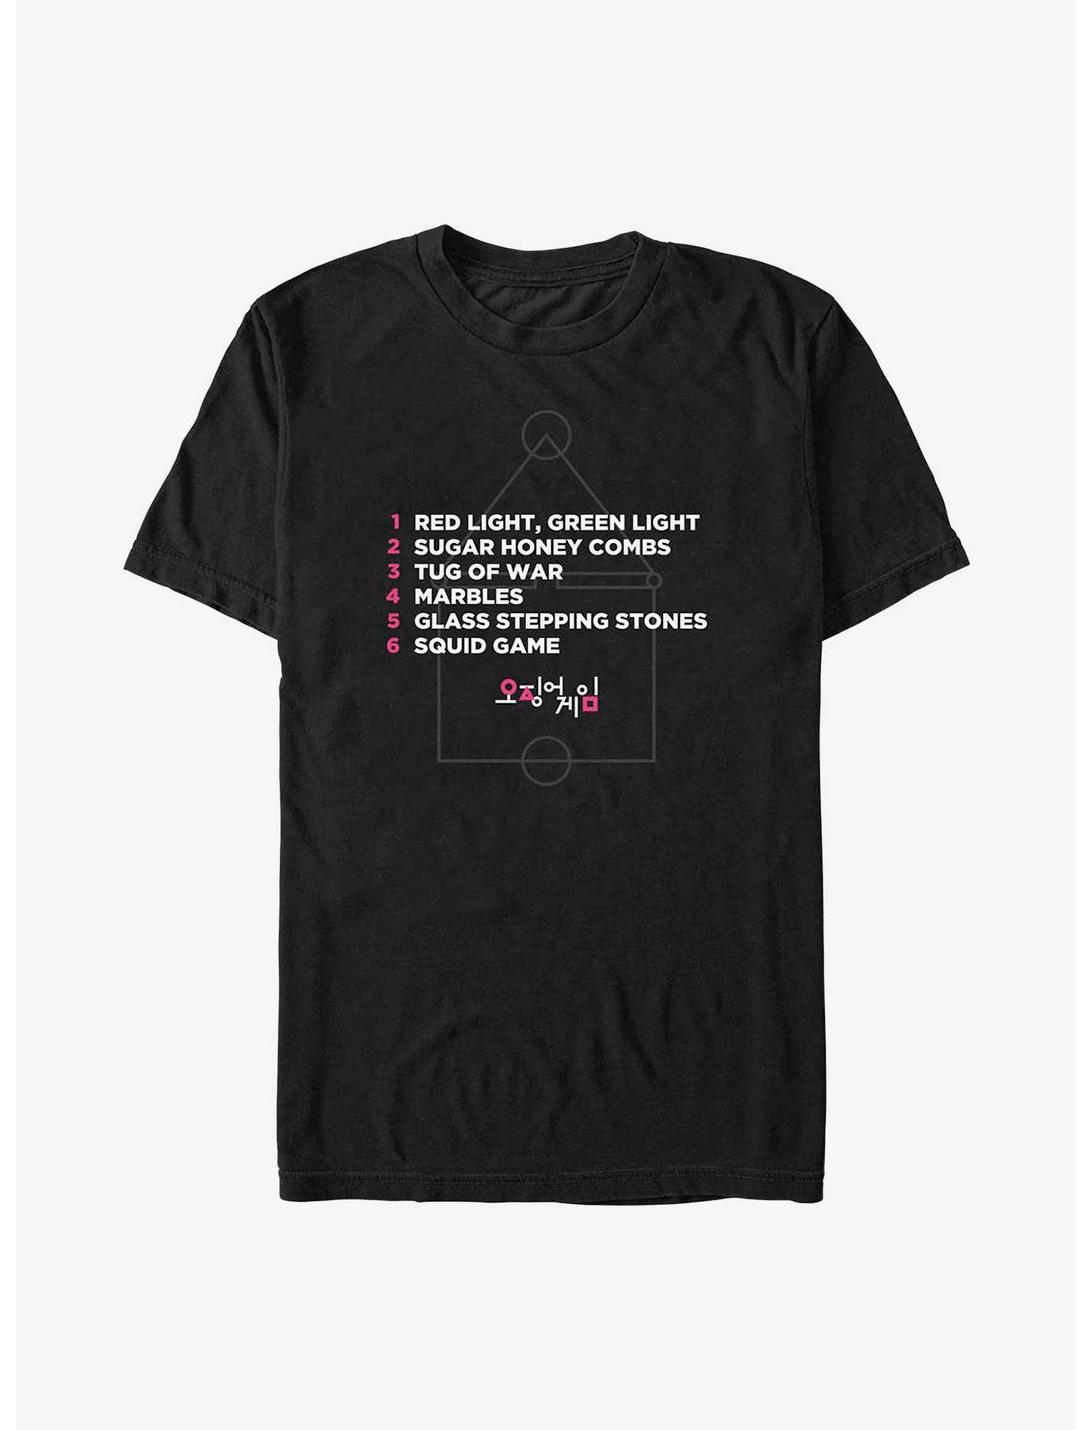 Squid Game Game List T-Shirt, BLACK, hi-res